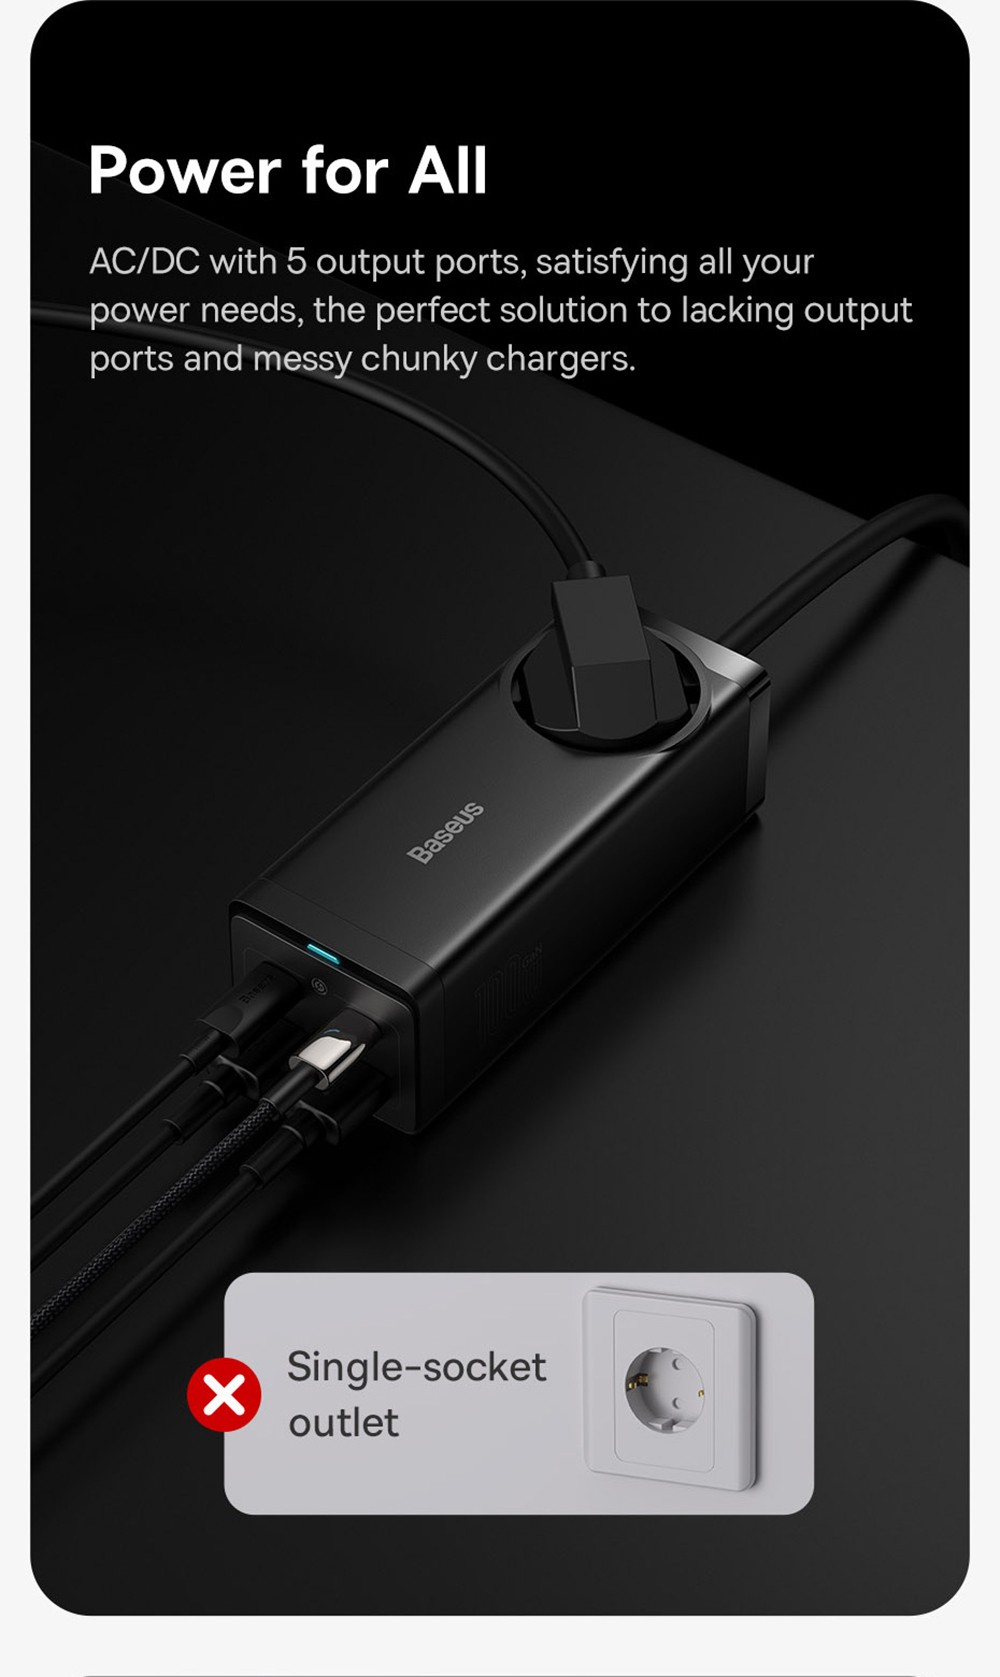 Baseus GaN 100W 5-Port Desktop Power Strip Charger, 2AC+2U+2C Quick Charge PD USB Type-C Fast Charging - US Plug